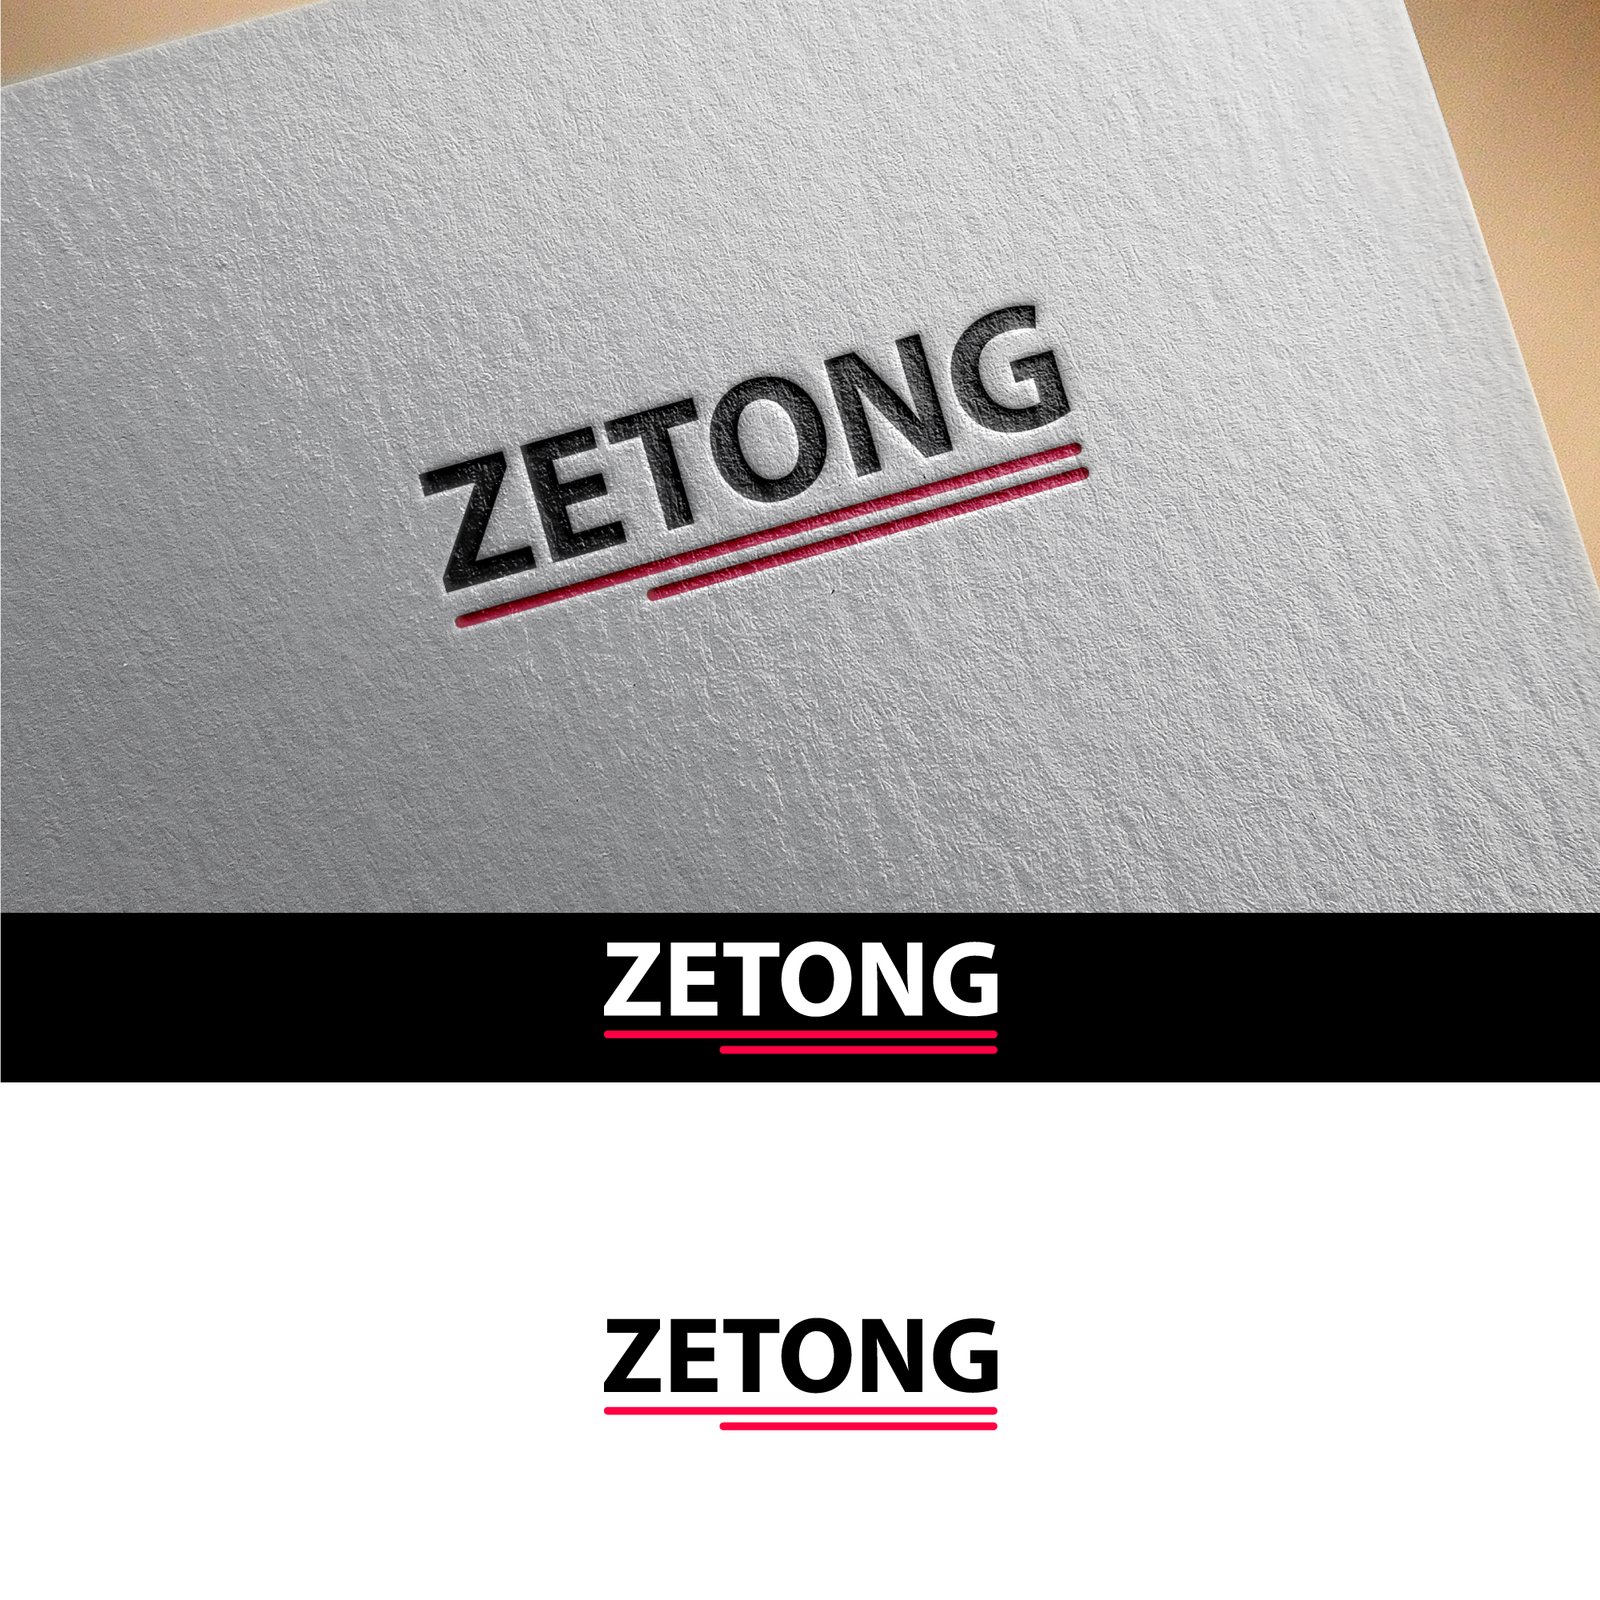 About Zetong®